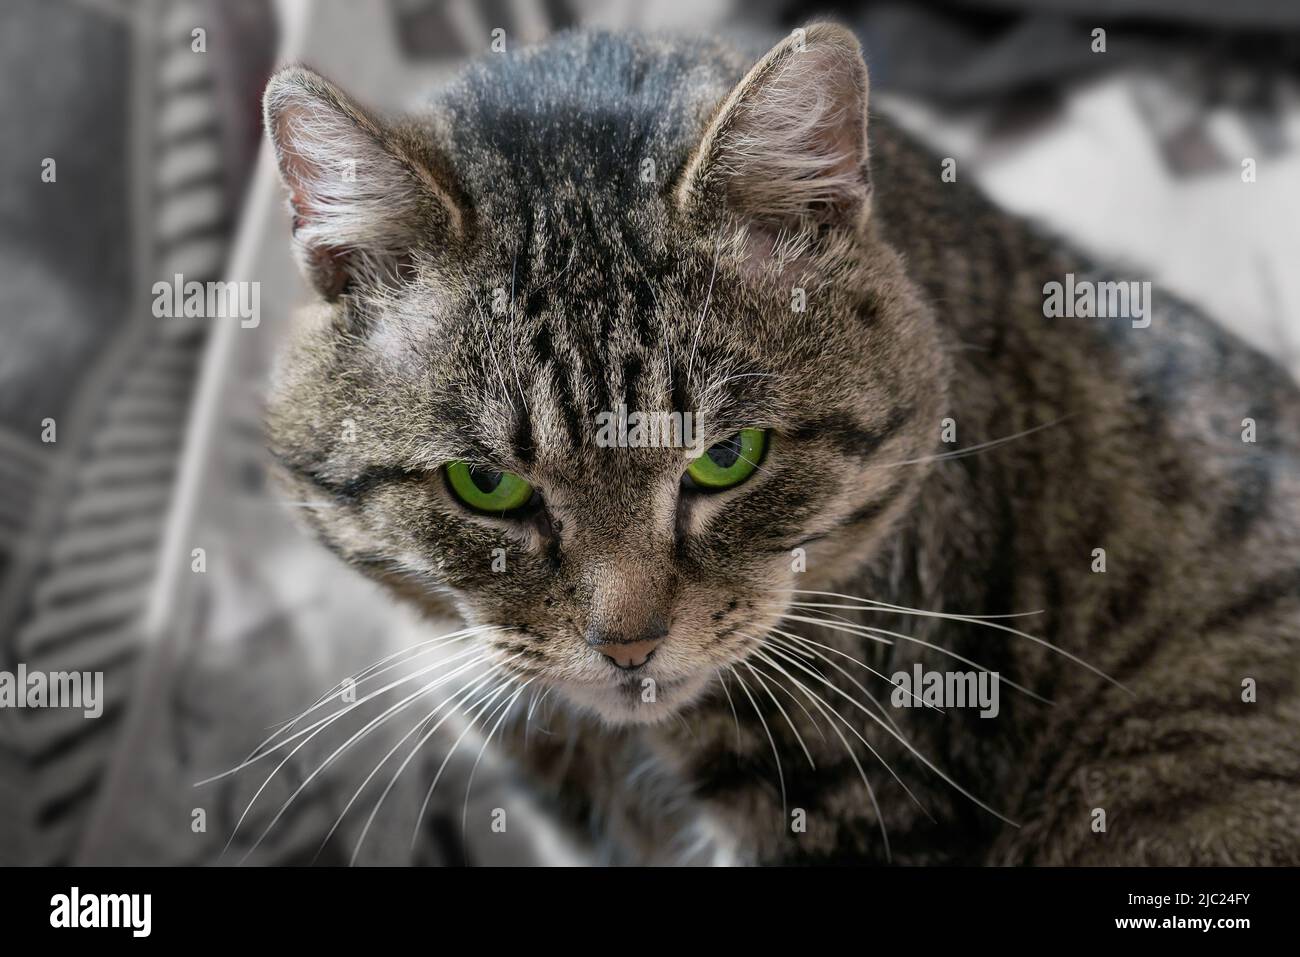 Grey tabby cat sullenly looking at camera. Grumpy green-eyed mature cat. Stock Photo